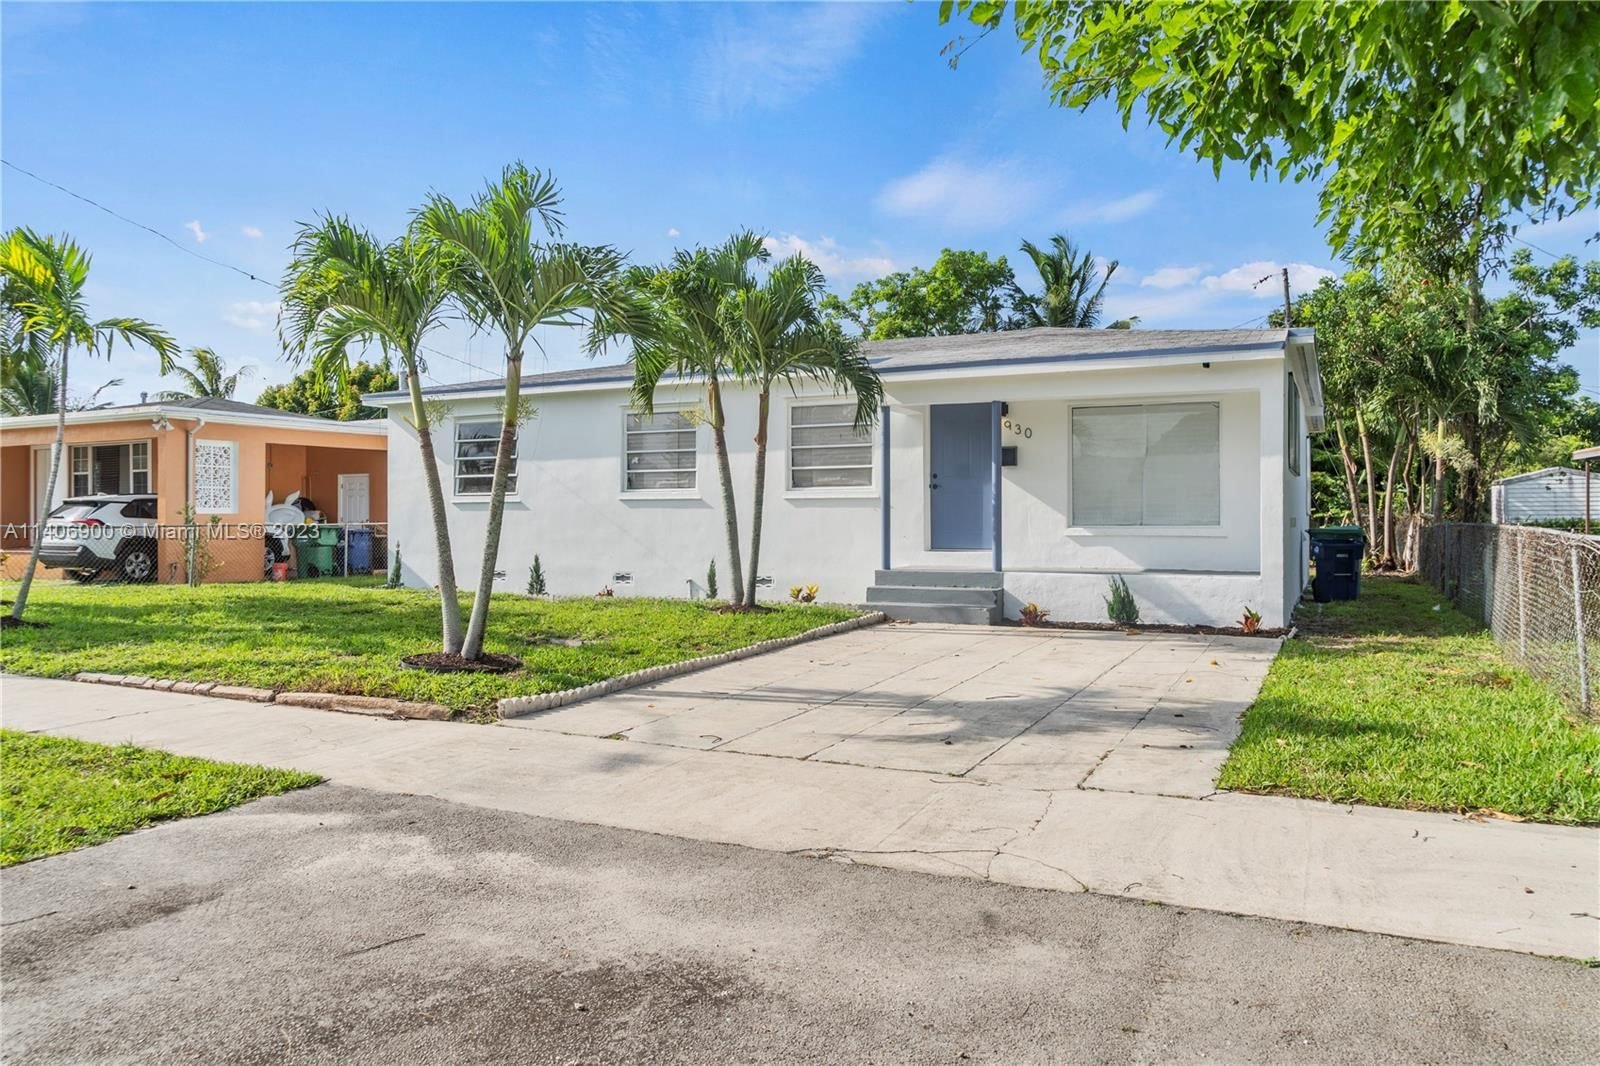 Real estate property located at 930 84th Ter, Miami-Dade County, Miami, FL